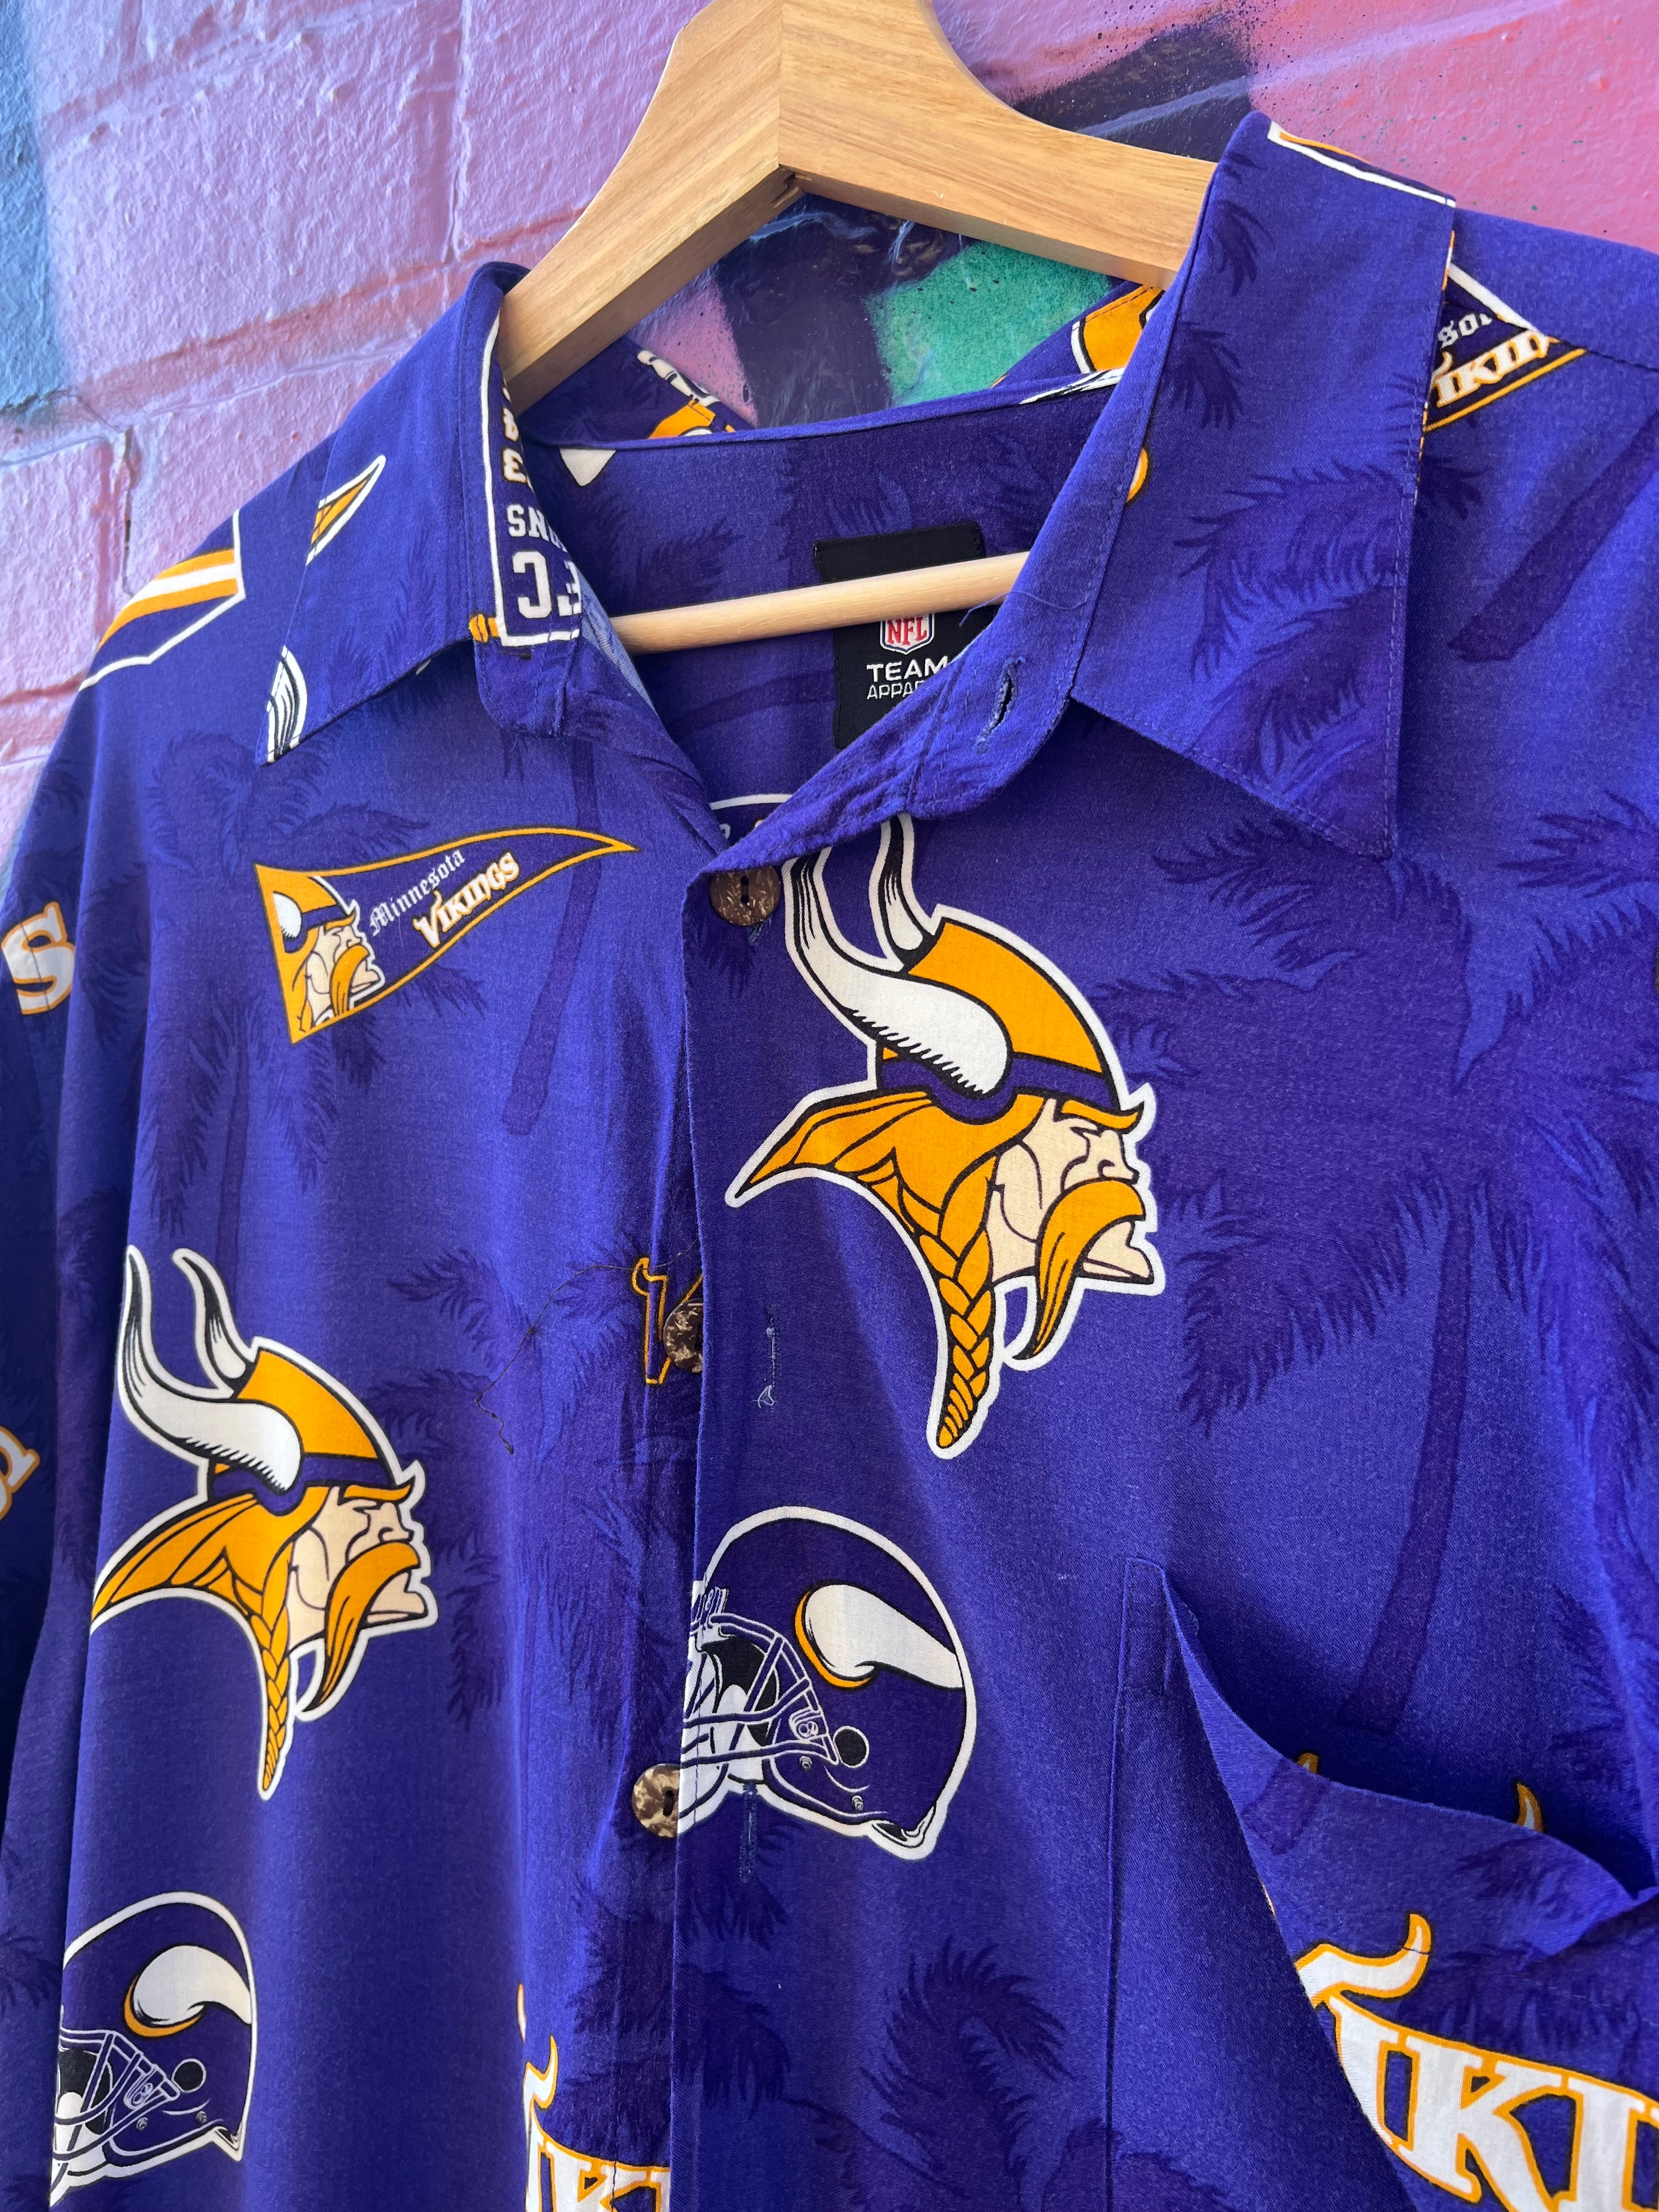 2XL - Minnesota Vikings All Over Print Button Up